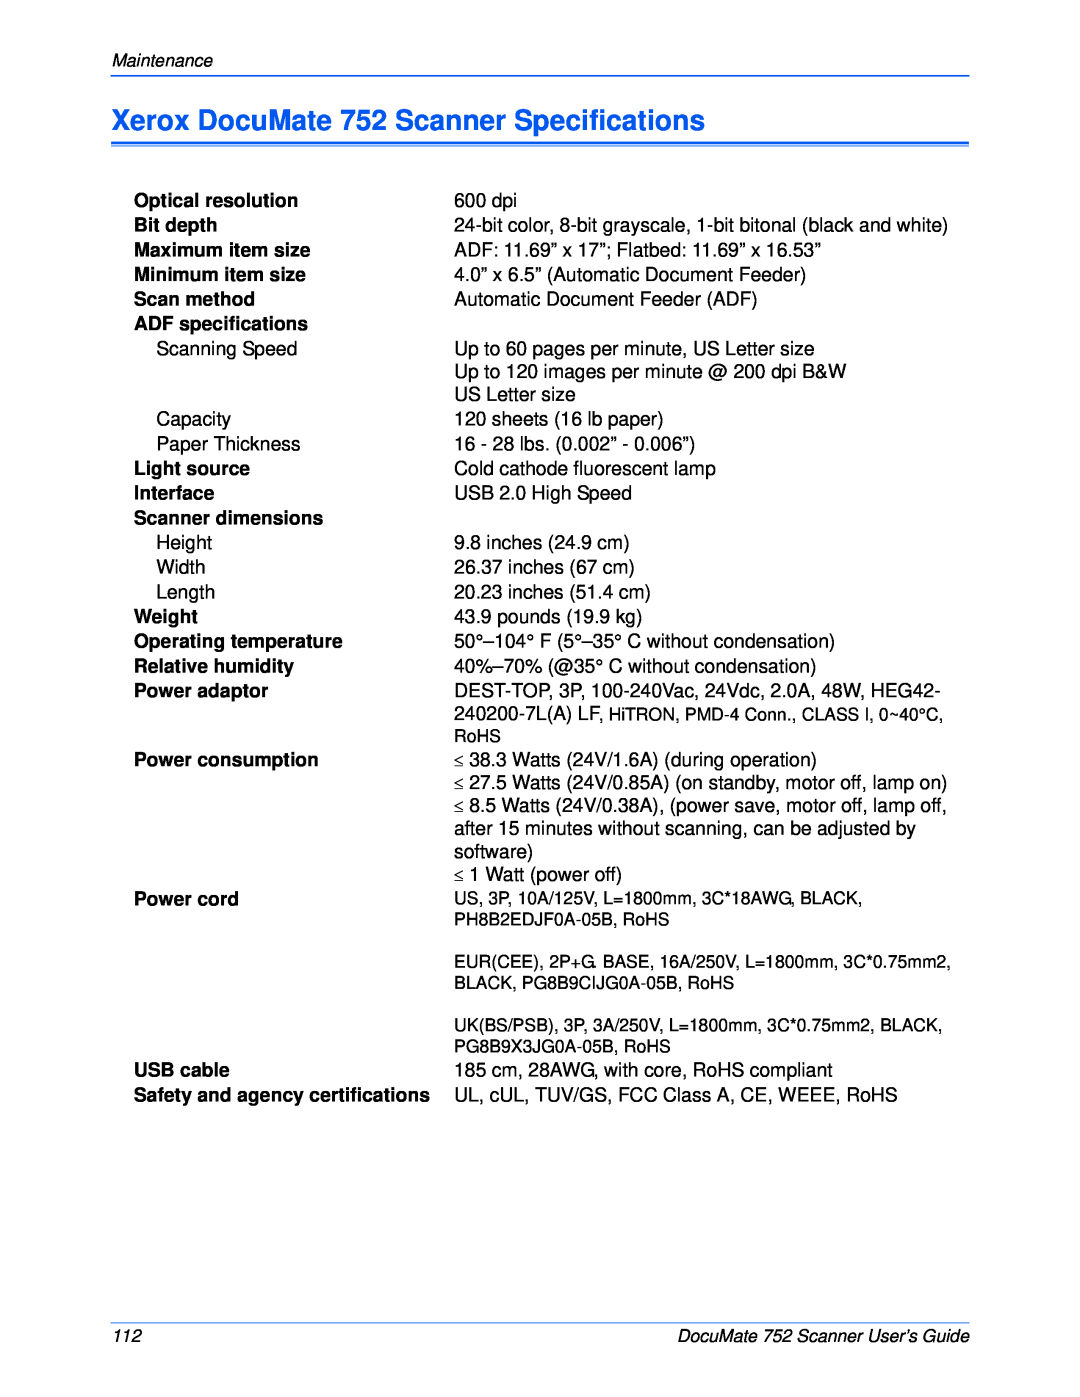 Xerox manual Xerox DocuMate 752 Scanner Specifications 